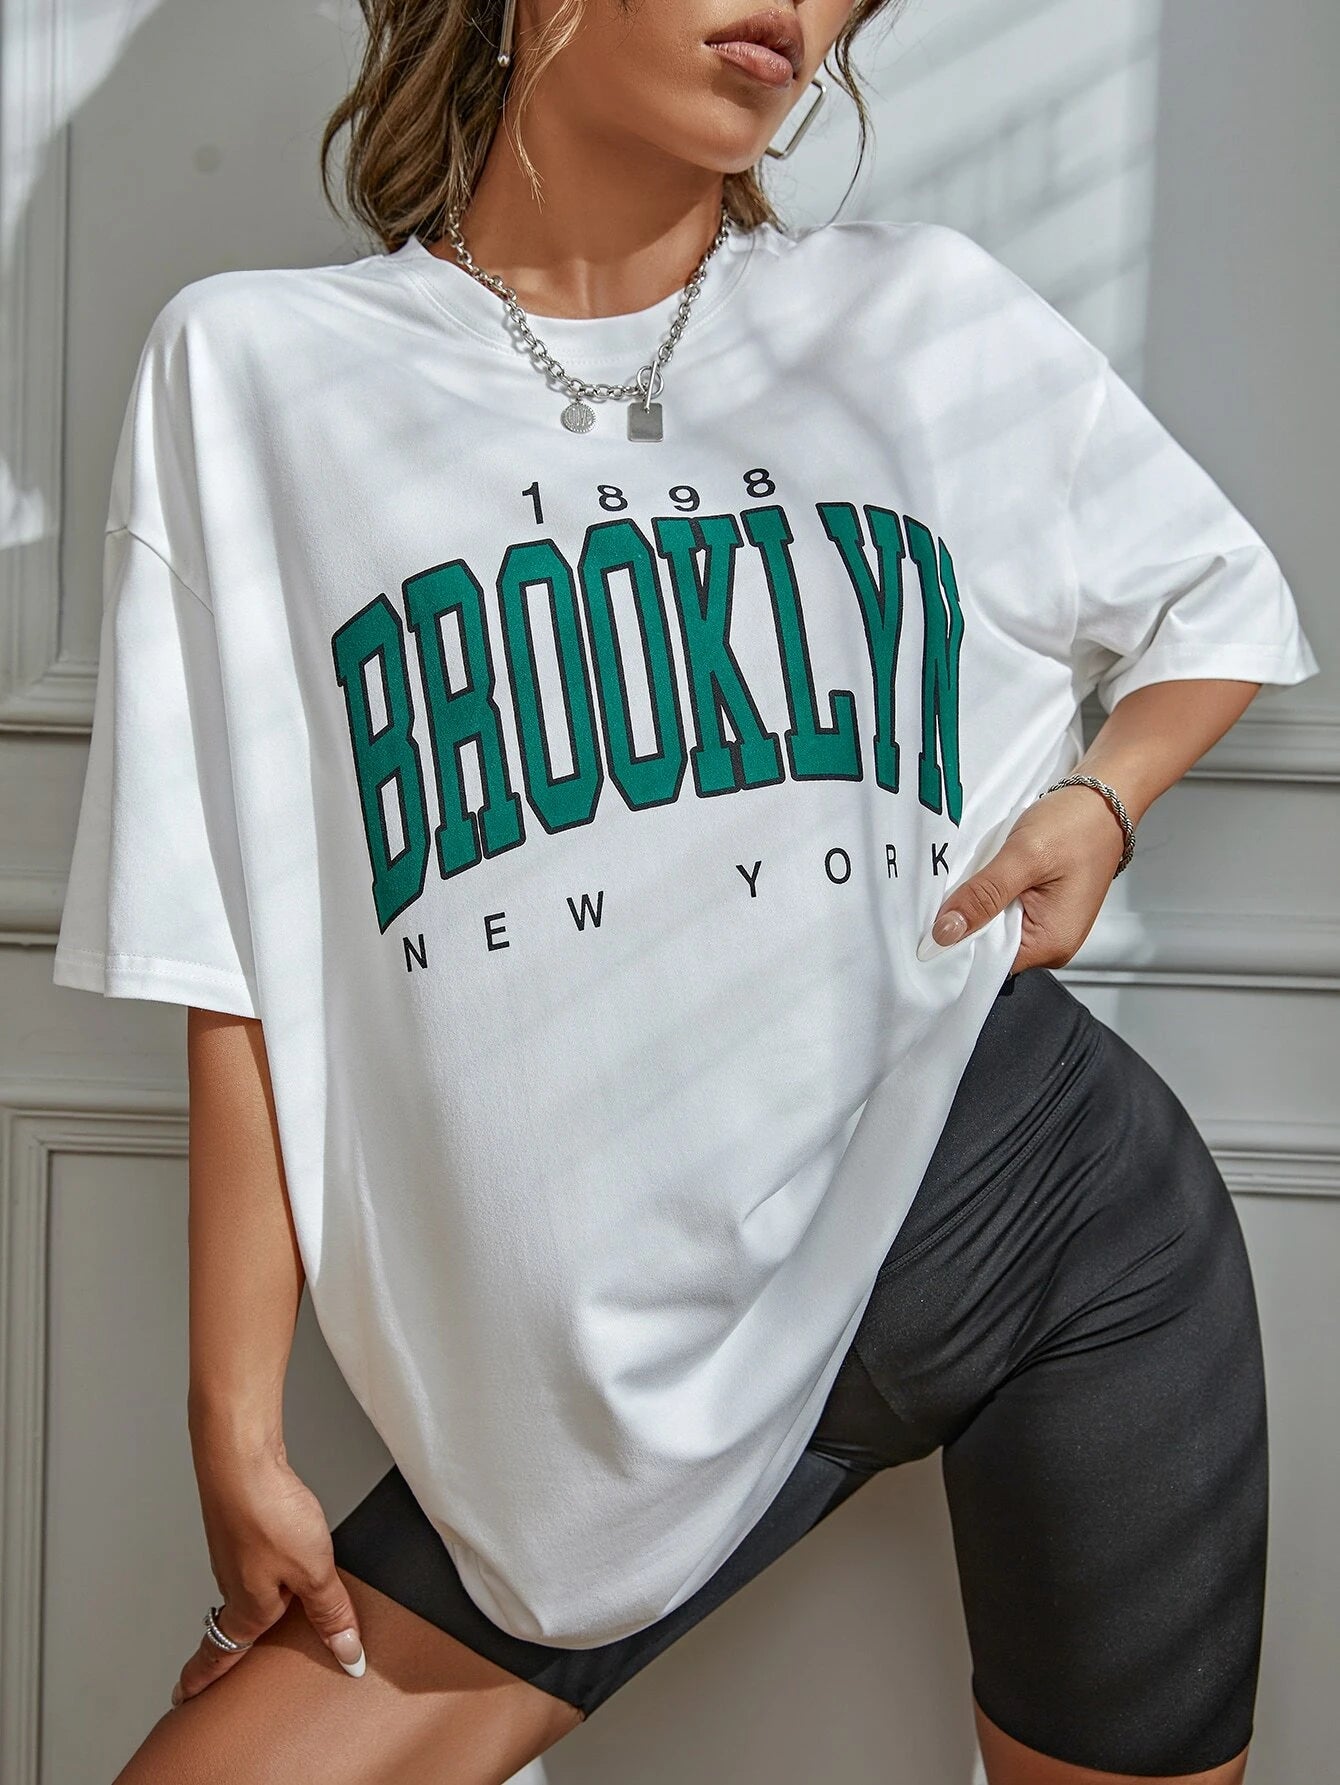 Camiseta Feminina Estilo Brooklyn New York 1898